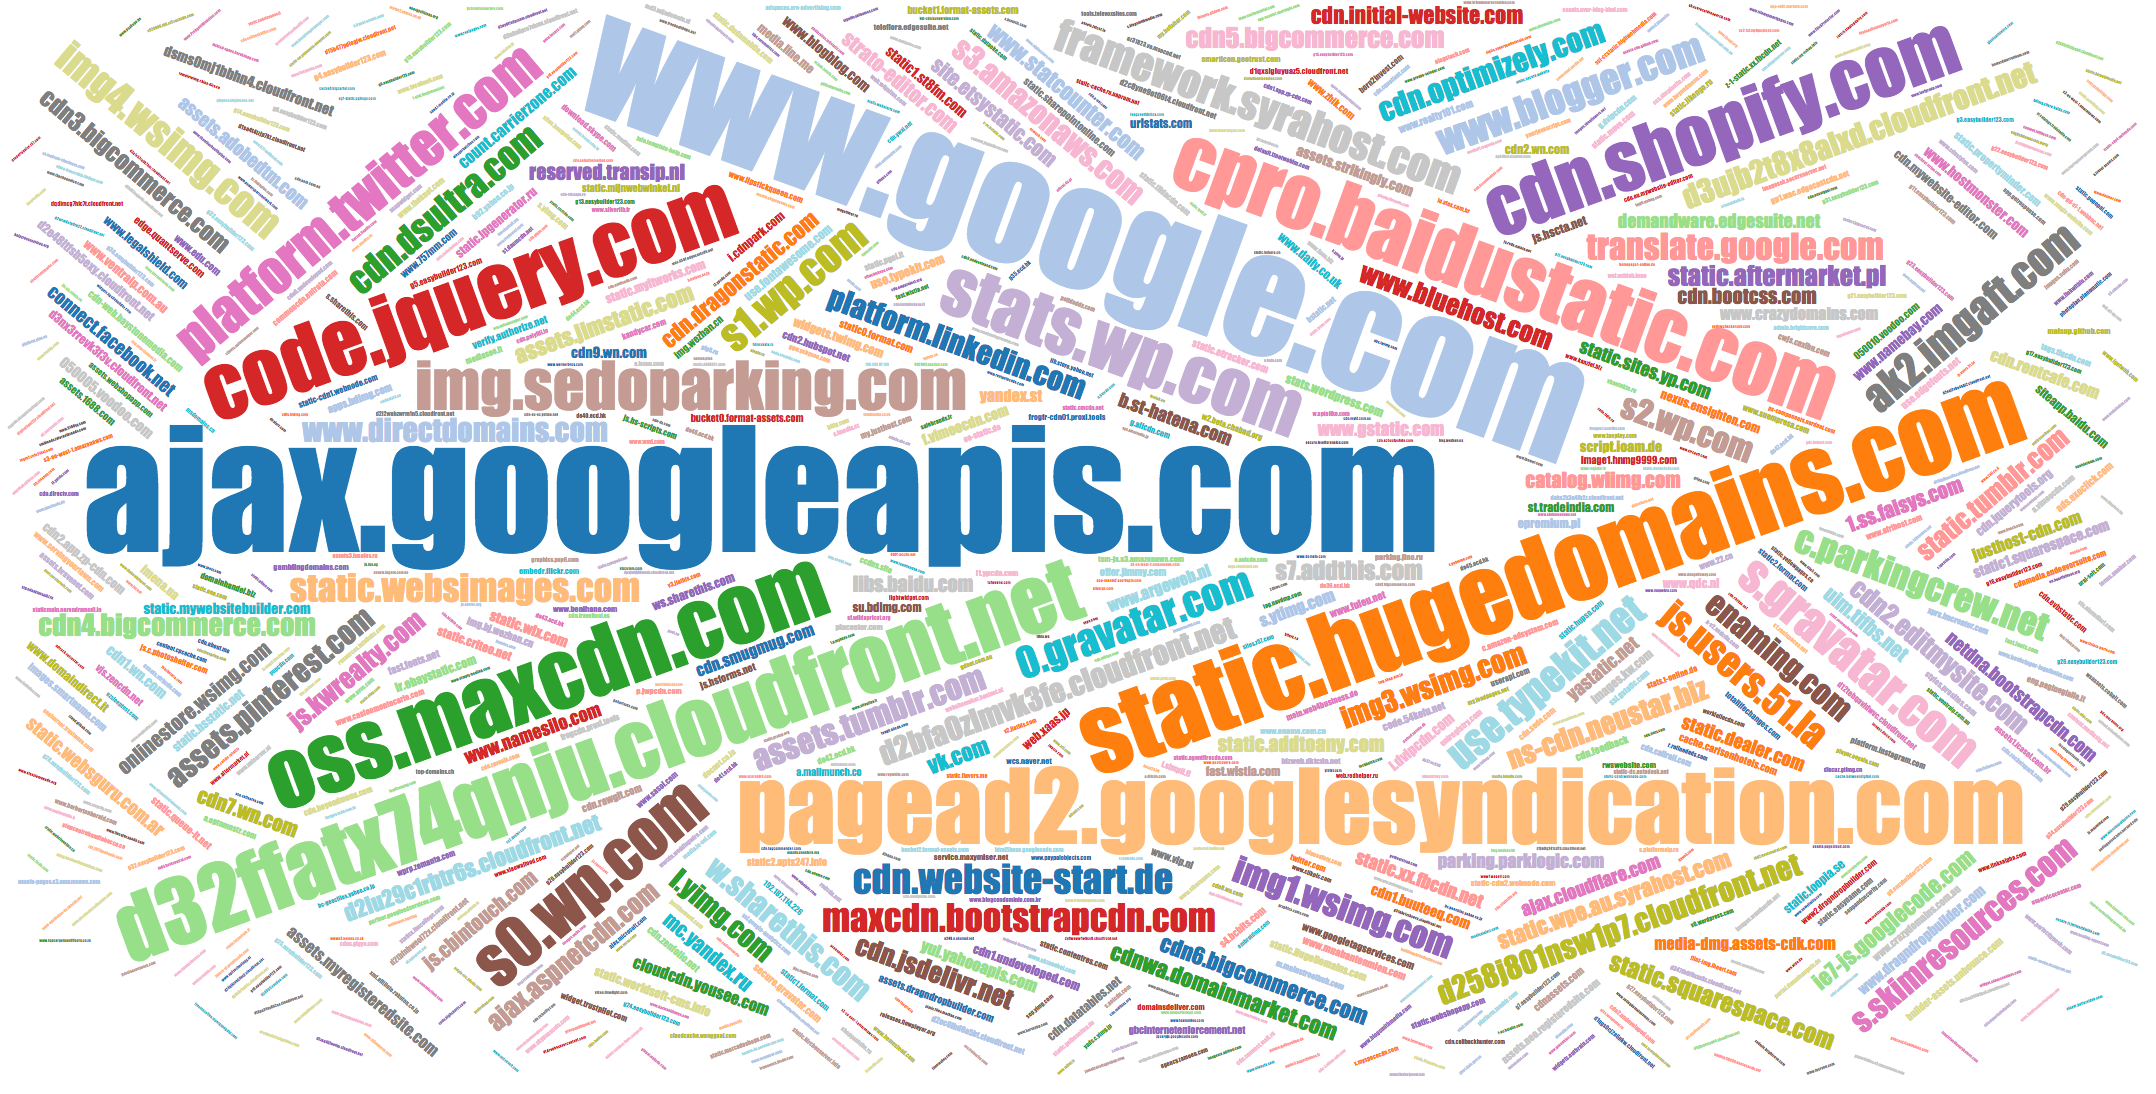 Popular names of JS domains oss.maxcdn.com, onlinestore.wsimg.com, etc.